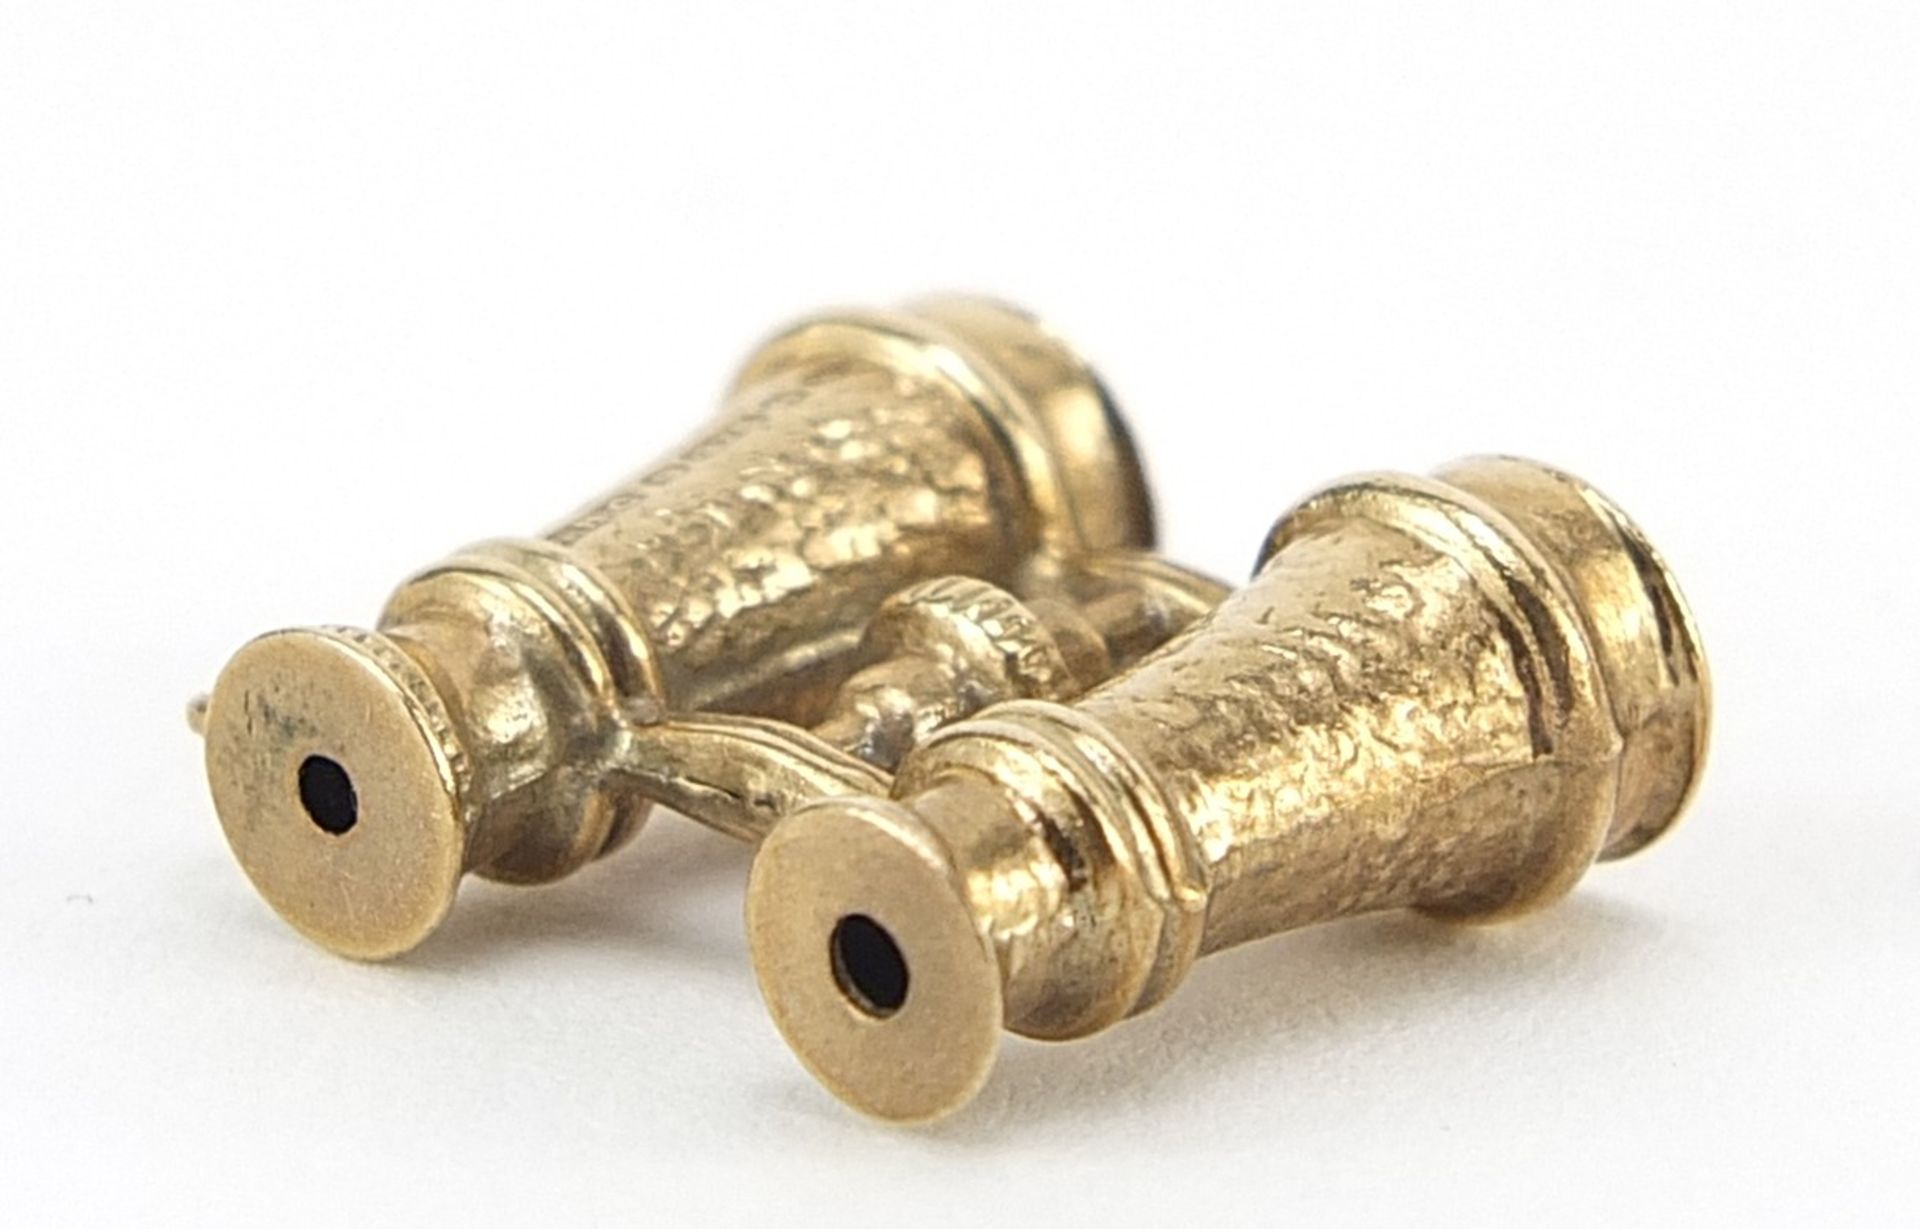 9ct gold pair of binoculars charm, 1.4cm wide, 1.1g - Image 2 of 3